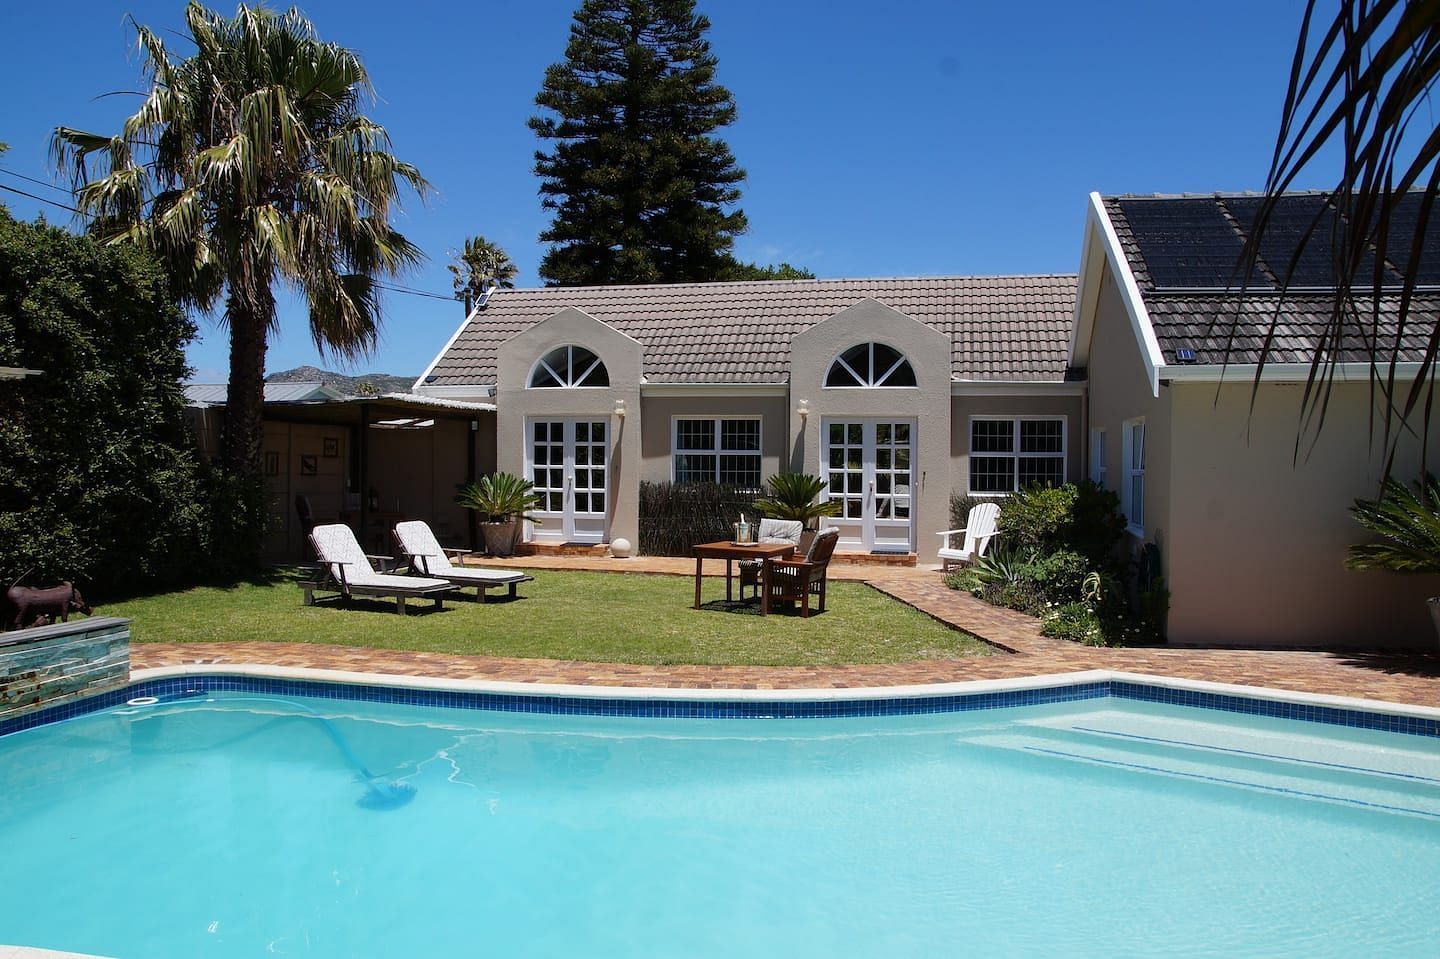 JWguest Residential Home at Cape Town, Western Cape | Wonderful Studio Apartment between 2 Oceans #1 | Jwbnb no brobnb 1